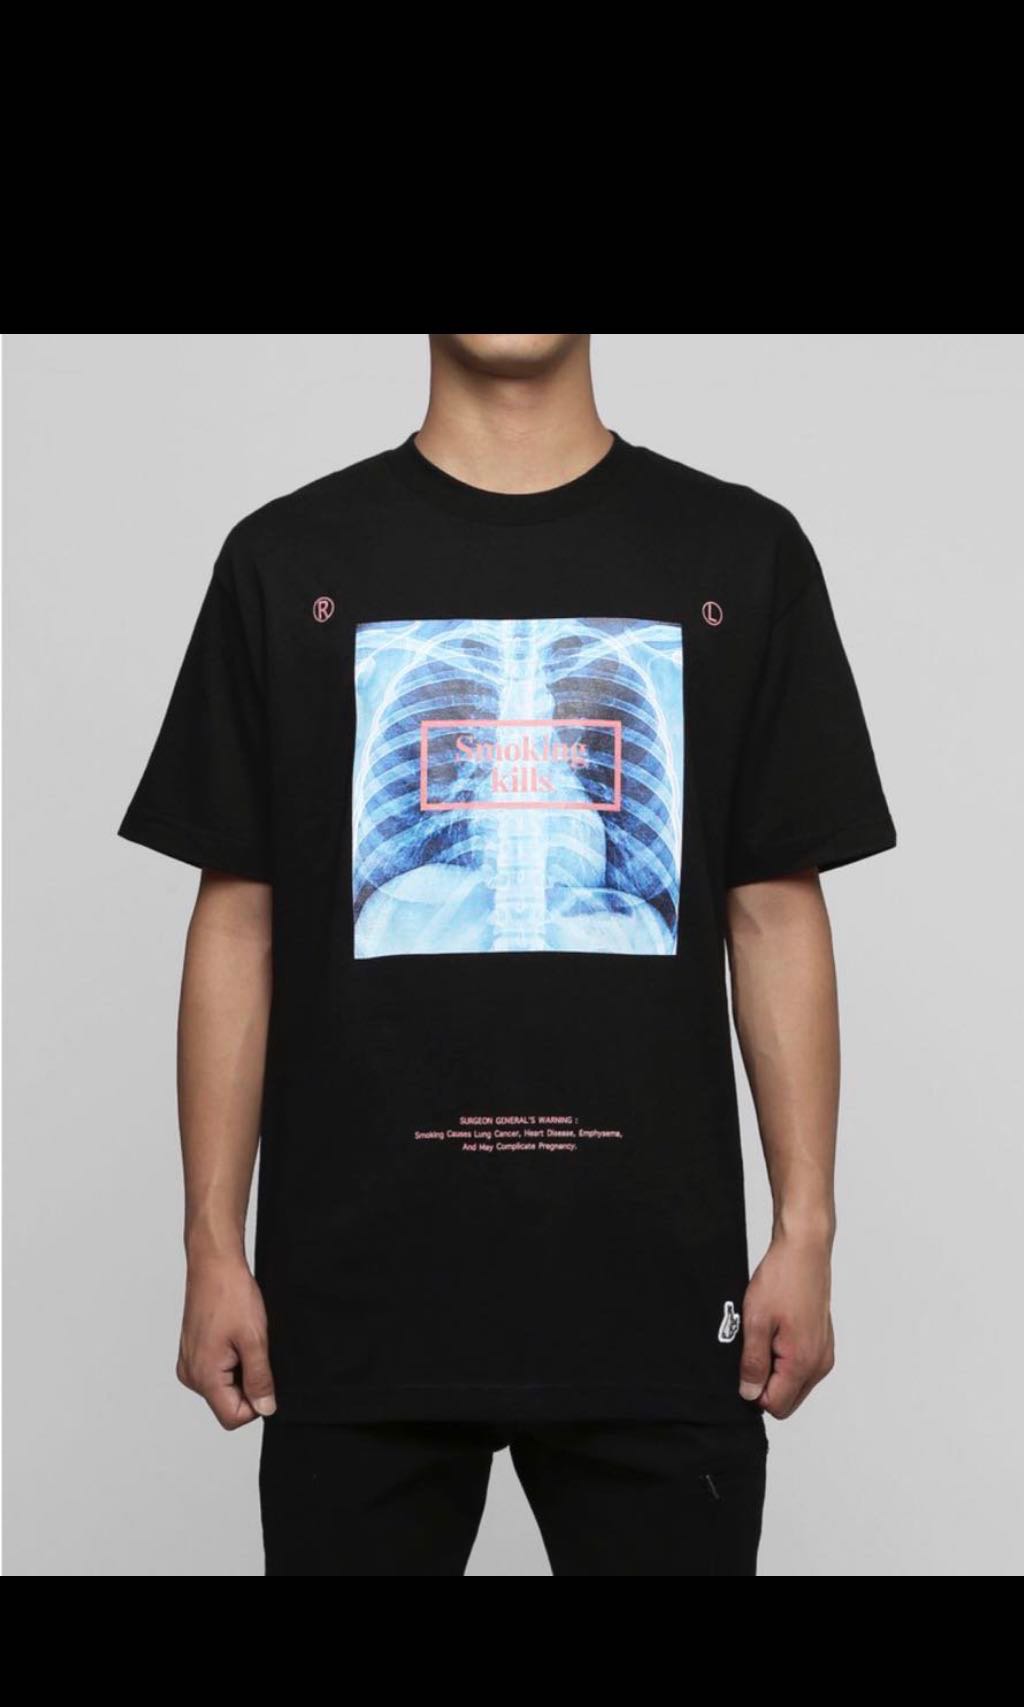 Fr2 Smoking Kills X Ray Tee Shirt Men S Fashion Clothes Tops On Carousell